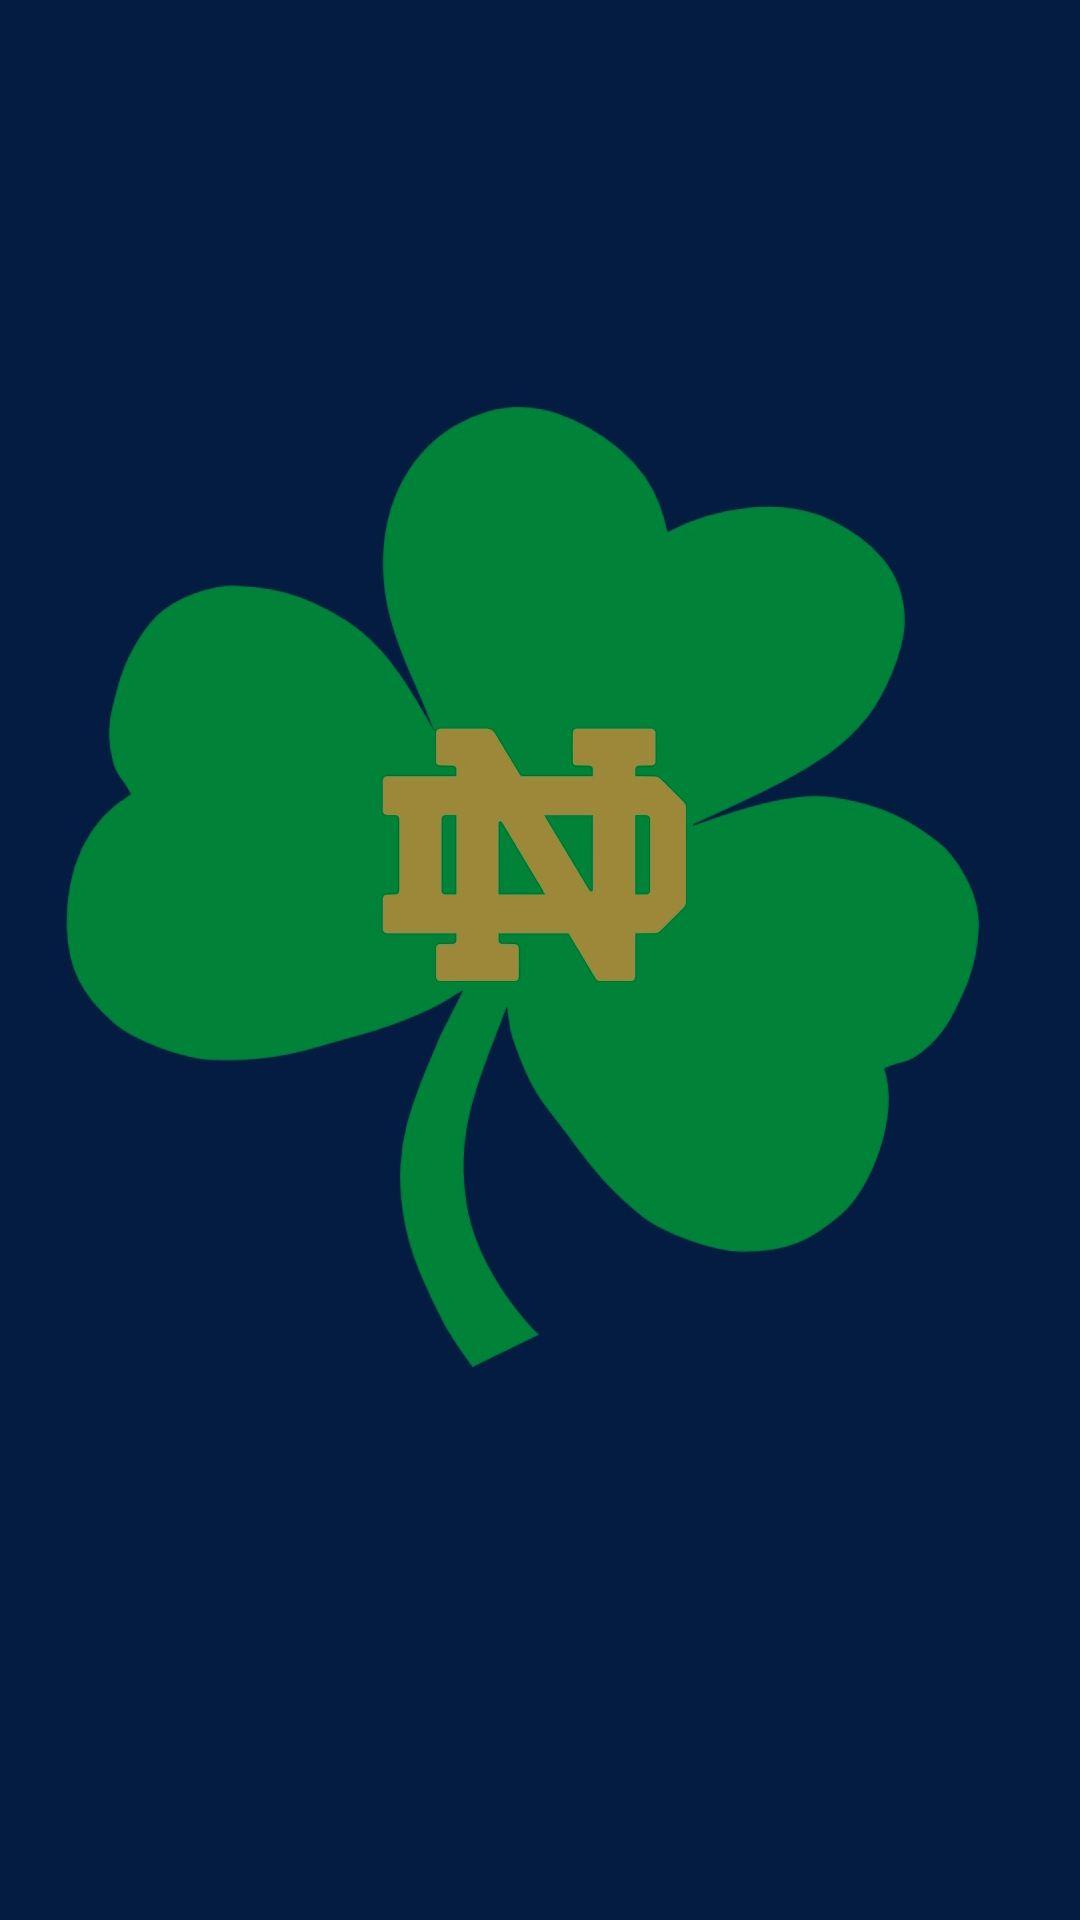 Notre Dame Fighting Irish Wallpaper with Shamrock Logo. HD